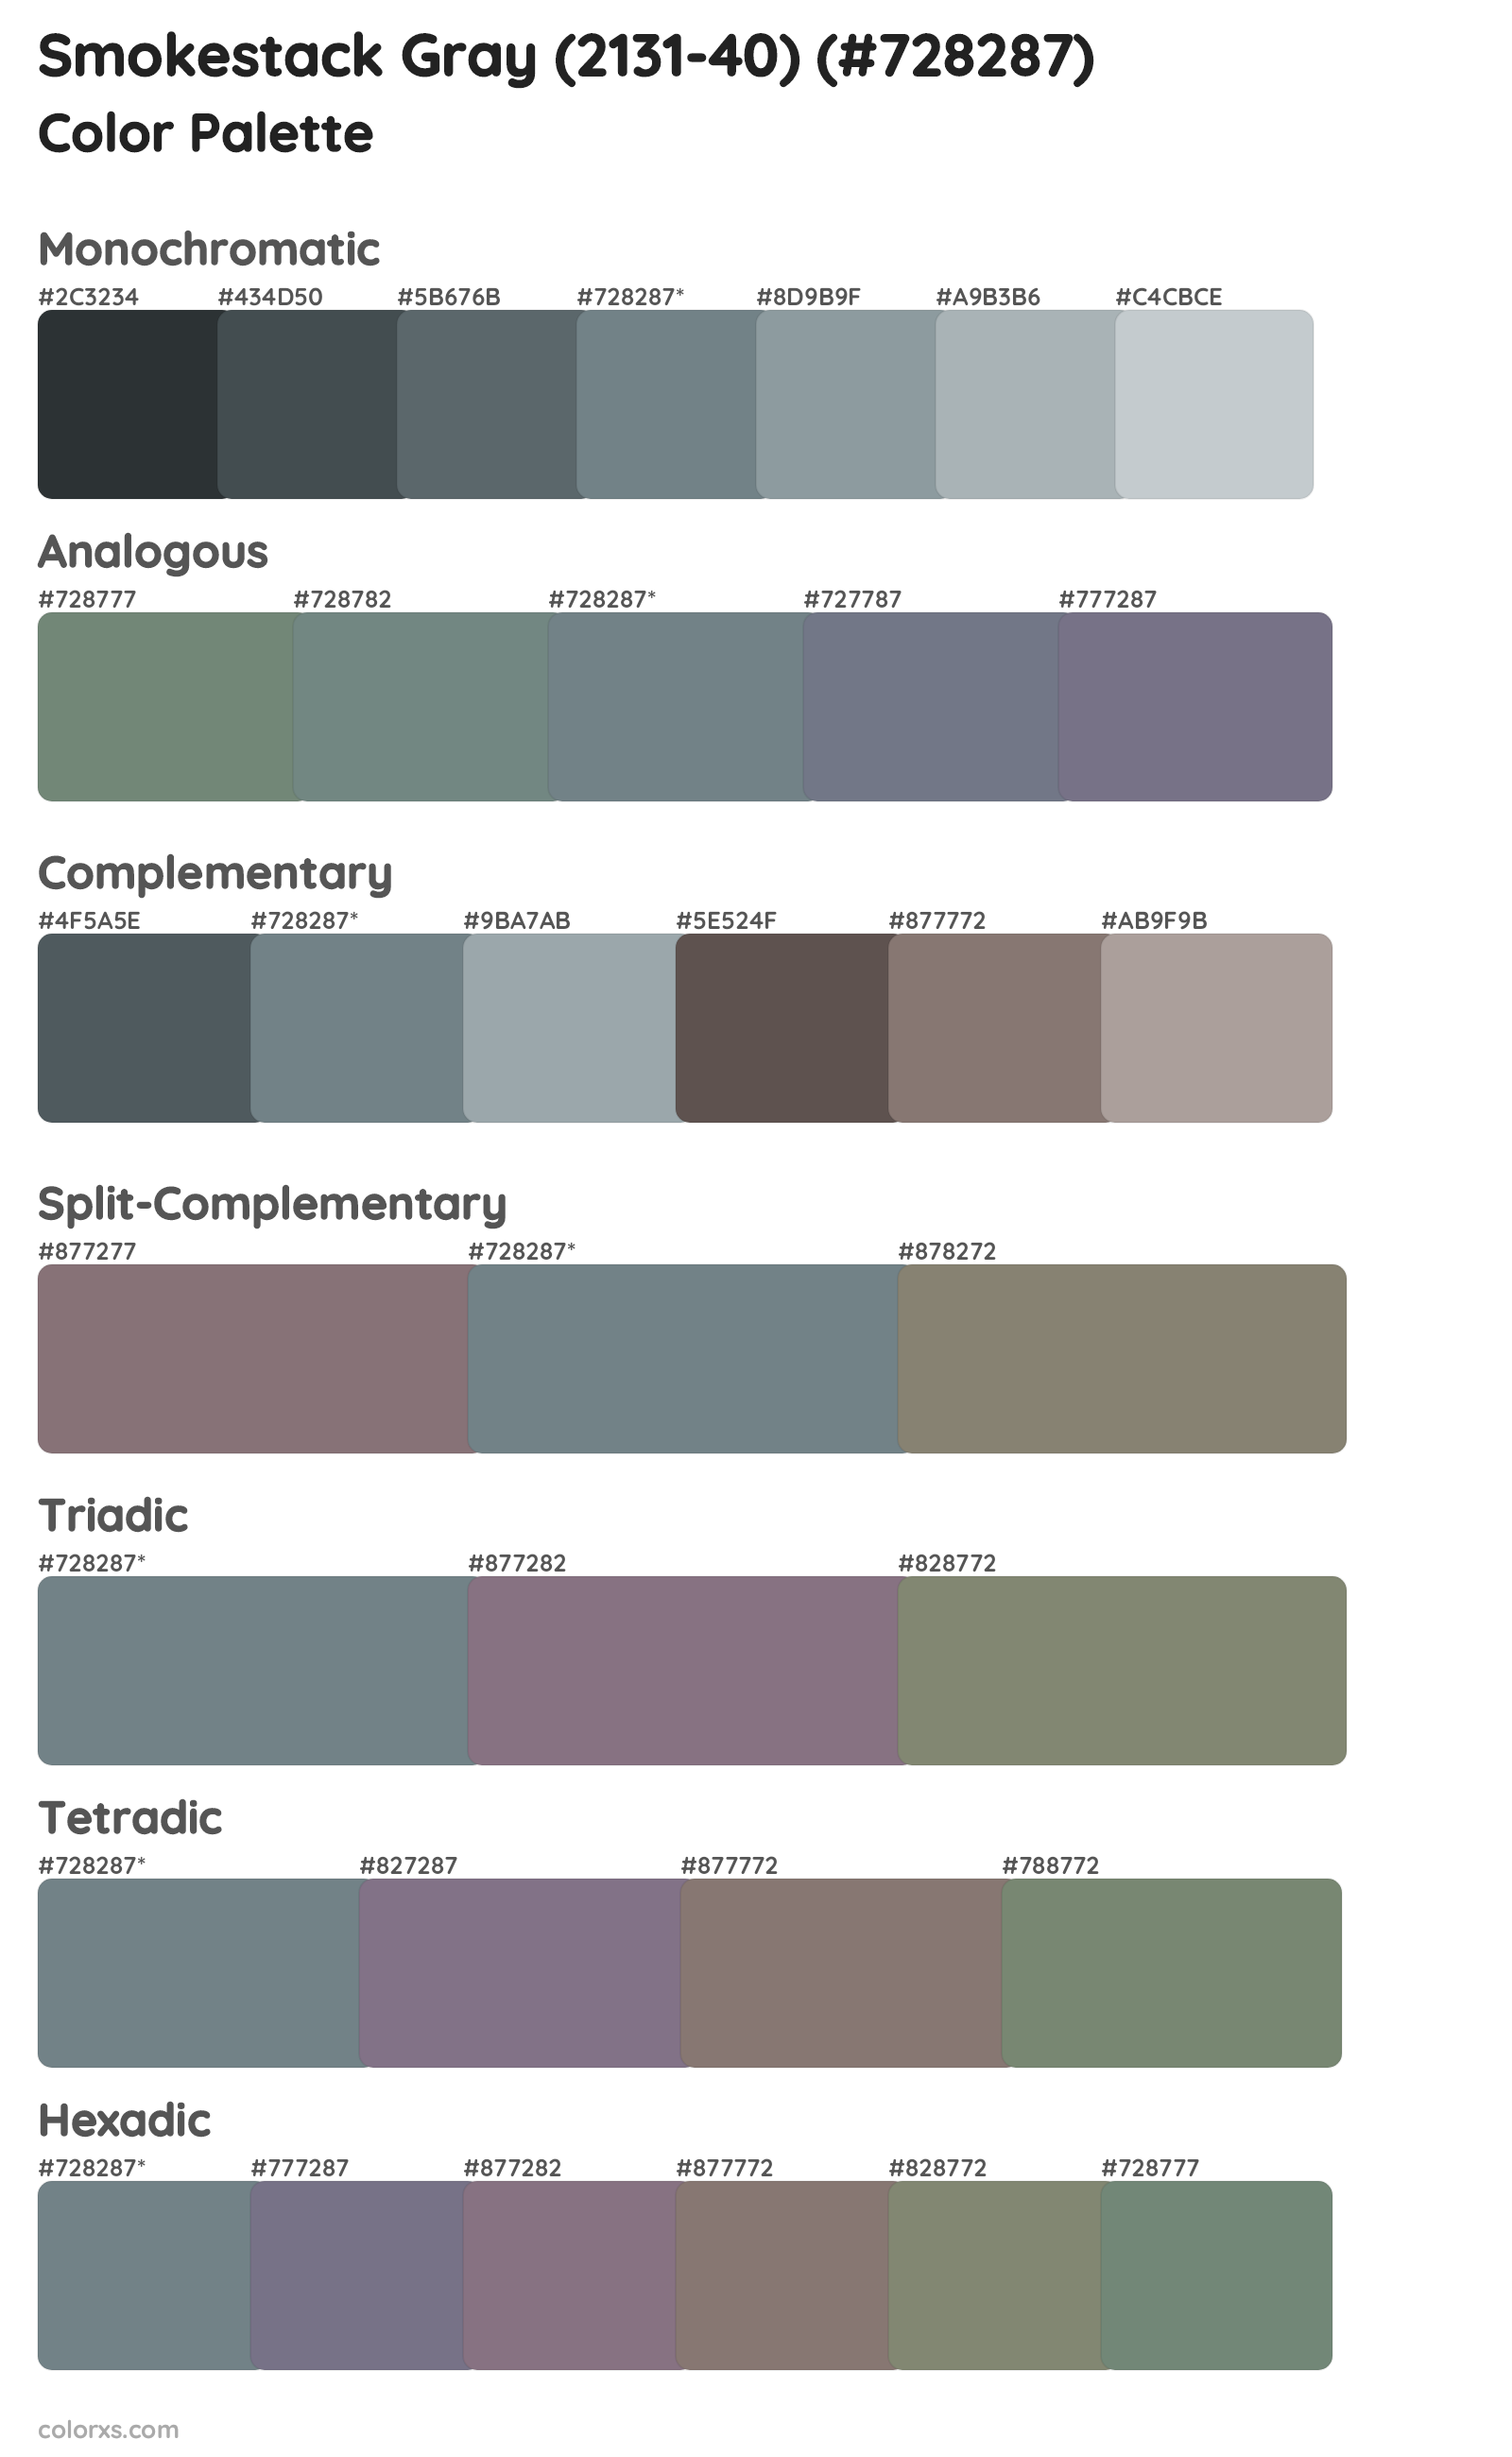 Smokestack Gray (2131-40) Color Scheme Palettes